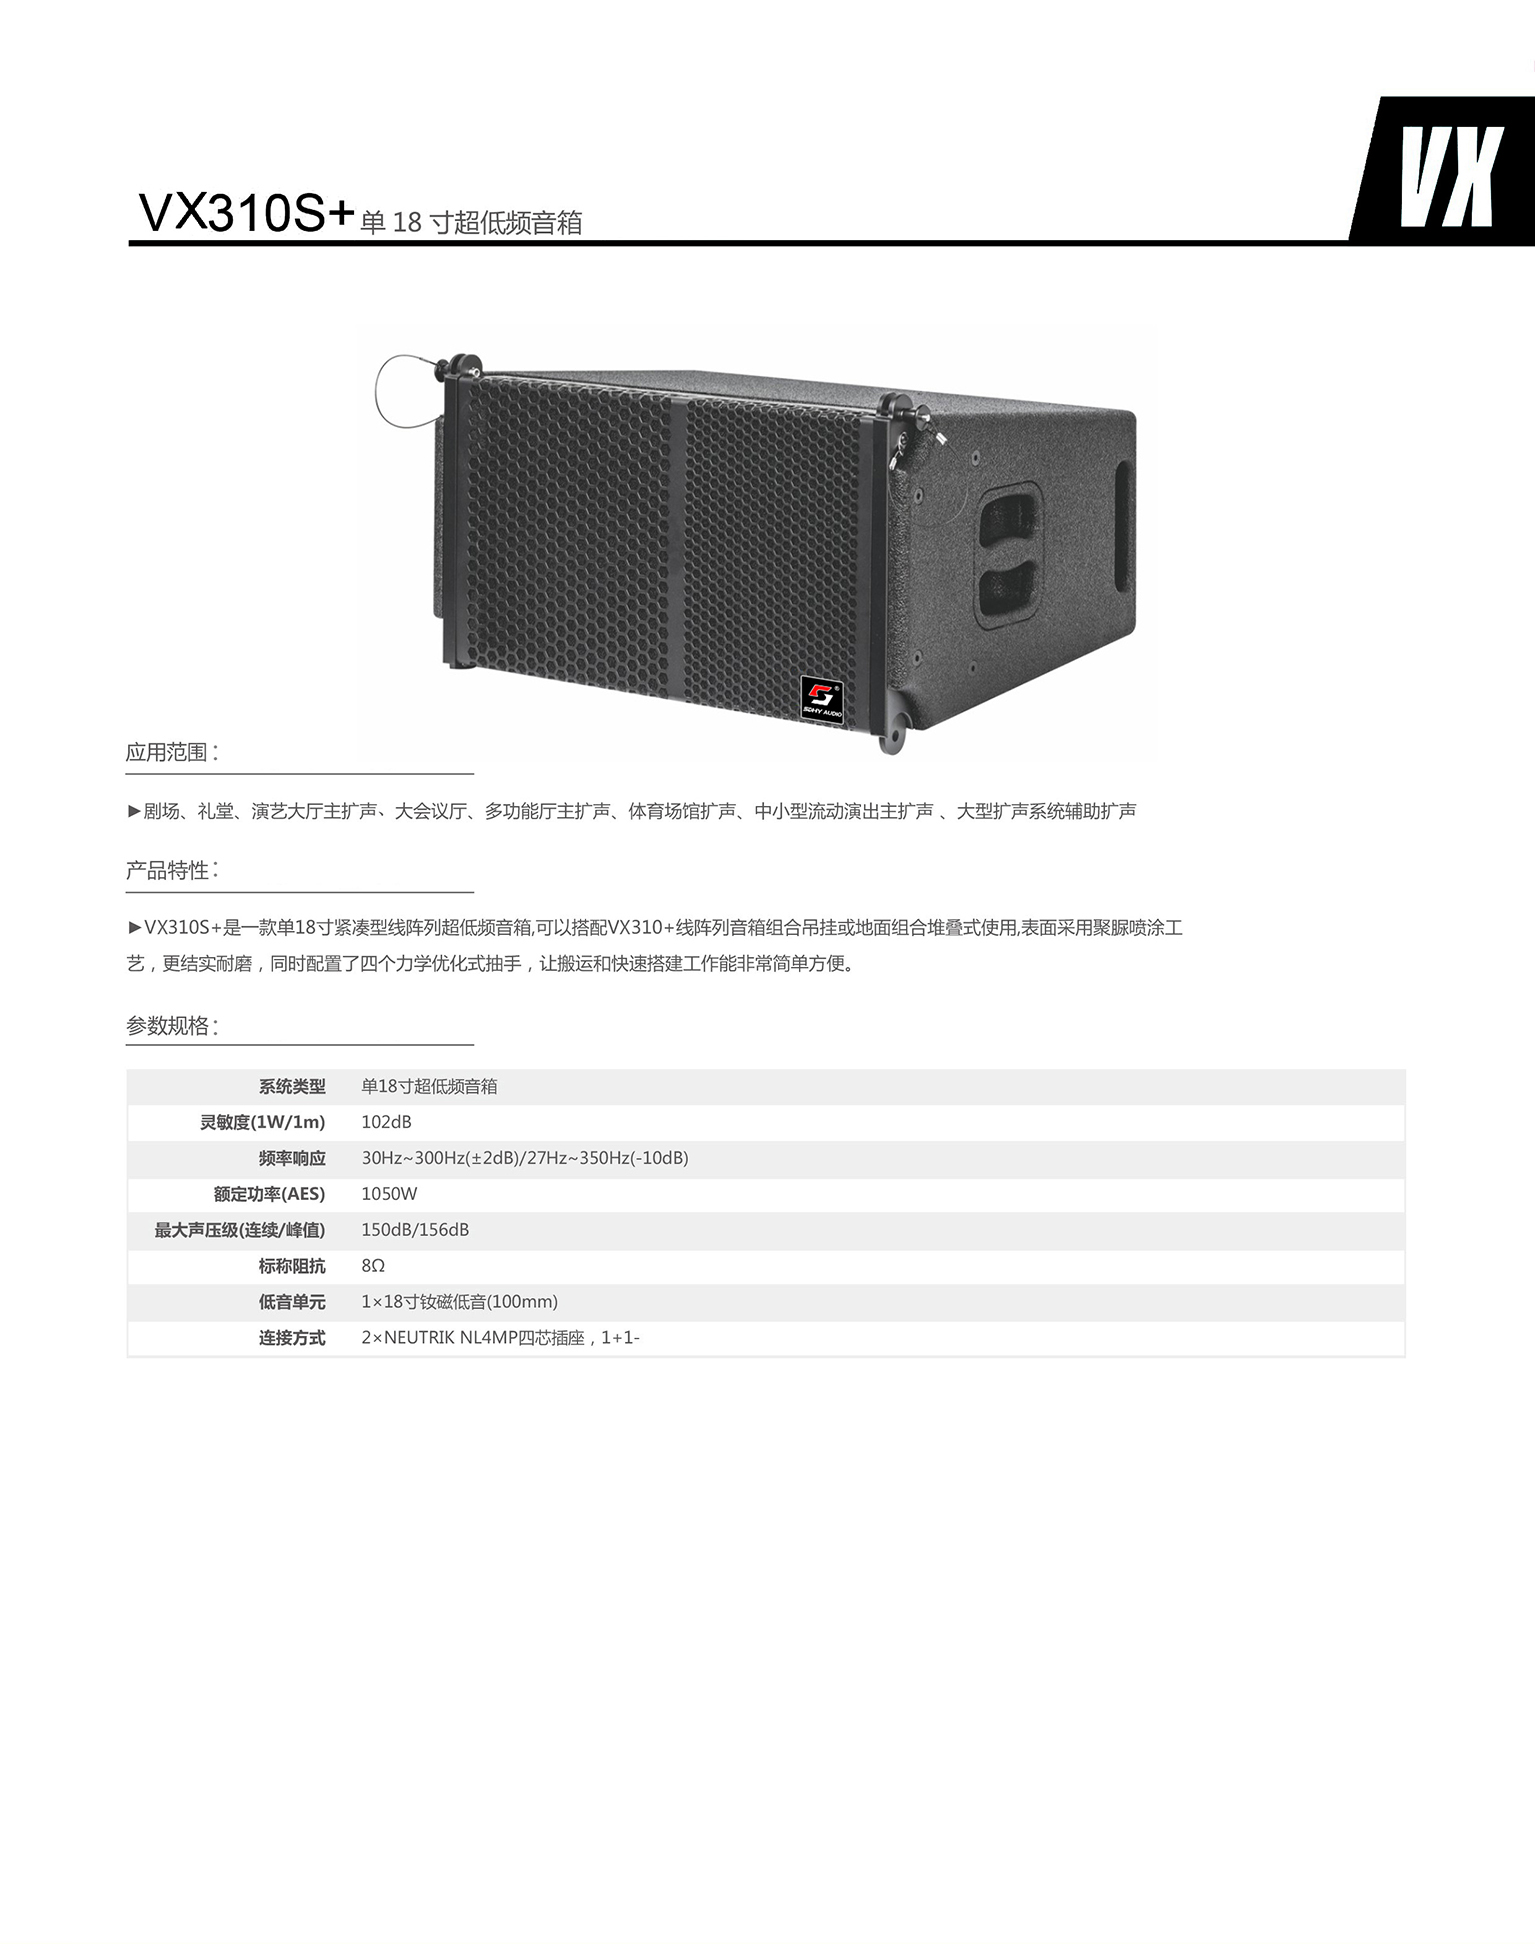 VX310S+ 单18寸超低频音箱.jpg